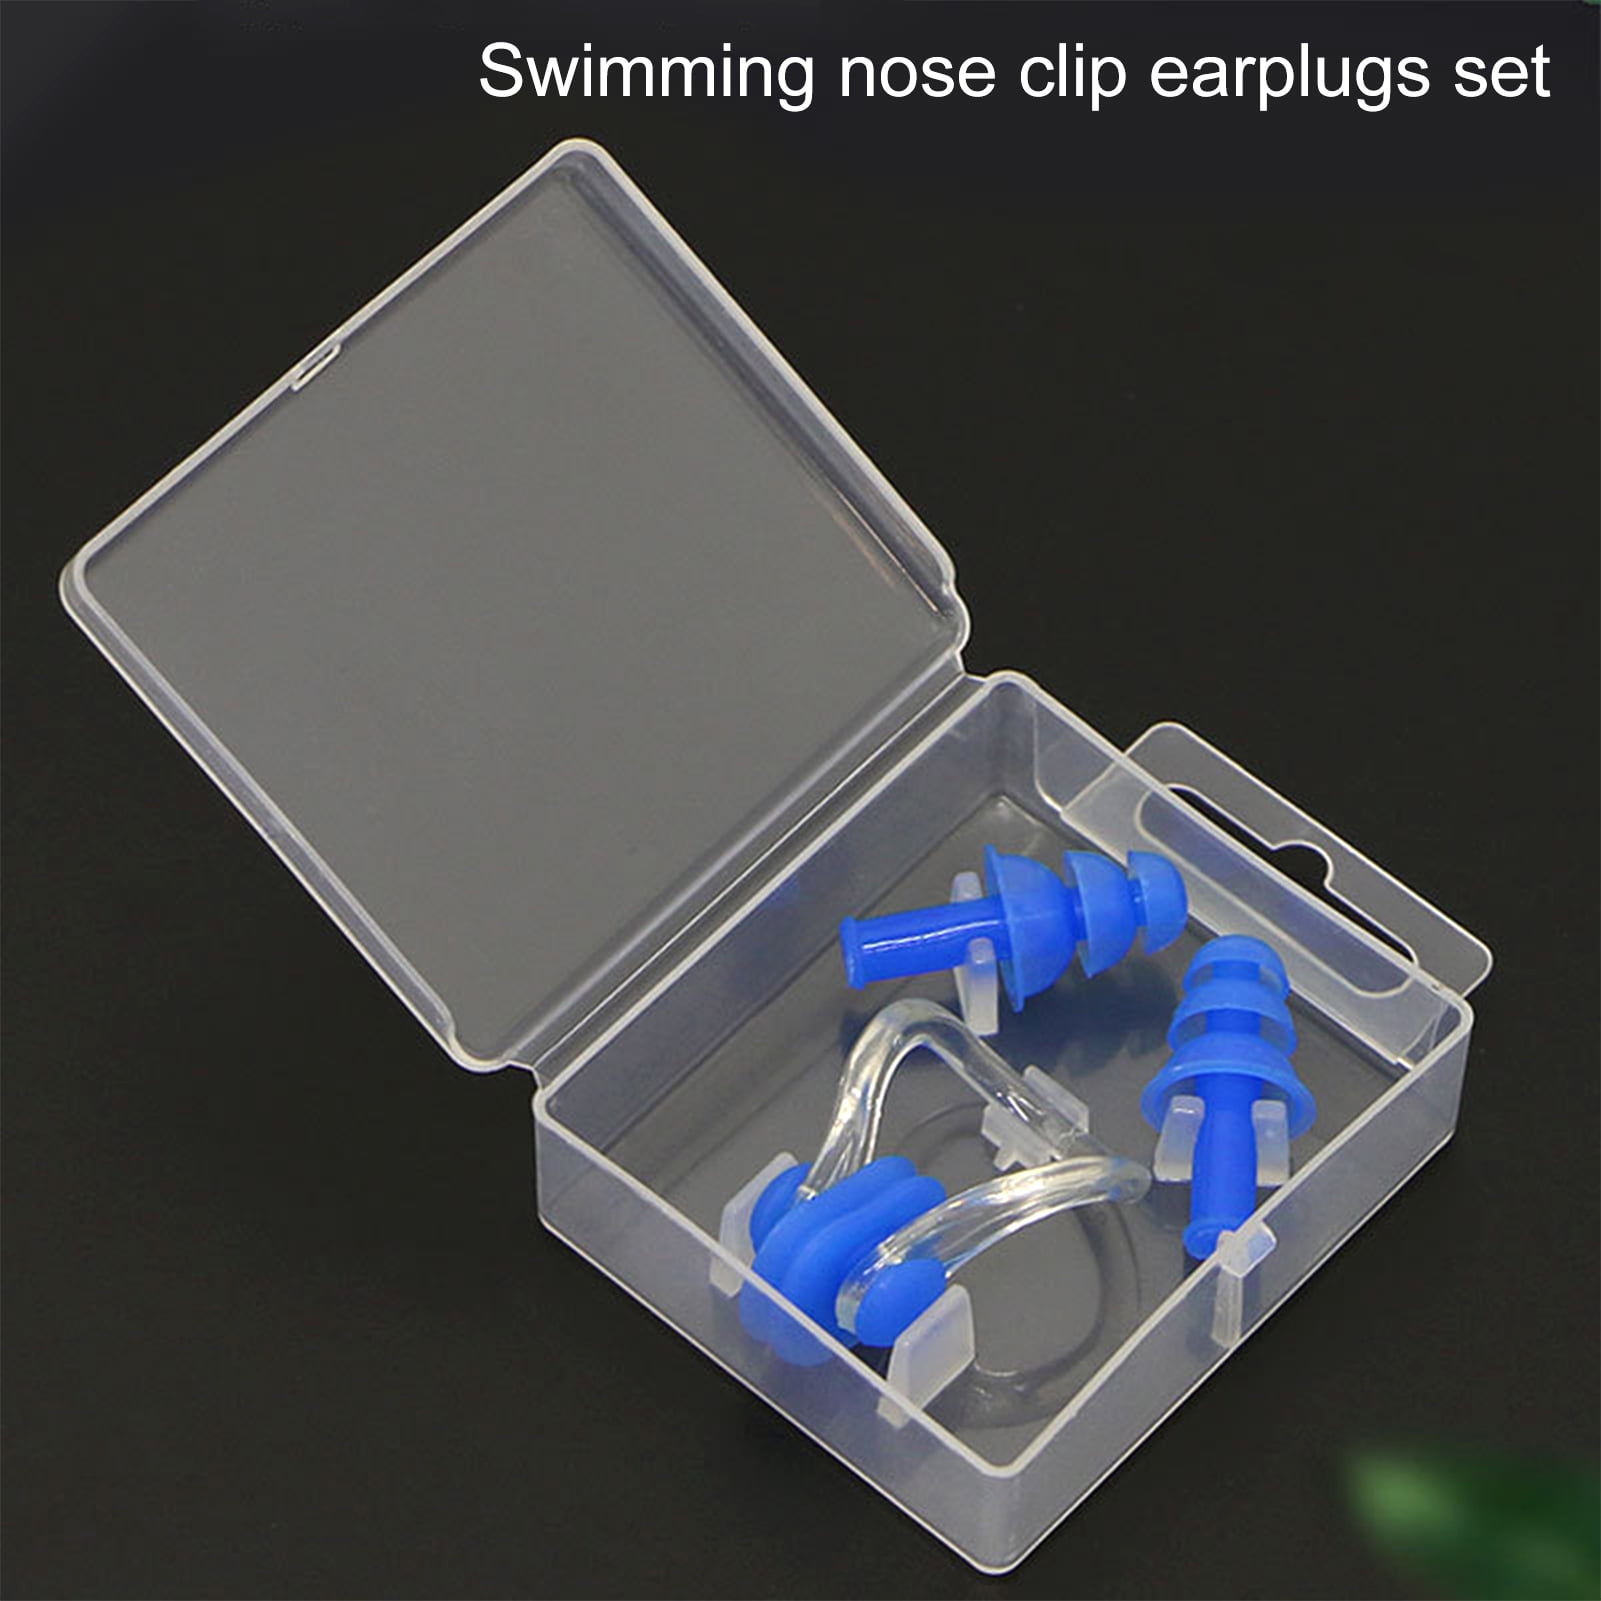 2 Sets Swimming Soft Nose Clip & Ear Plug Earplug Set Water Swim New 